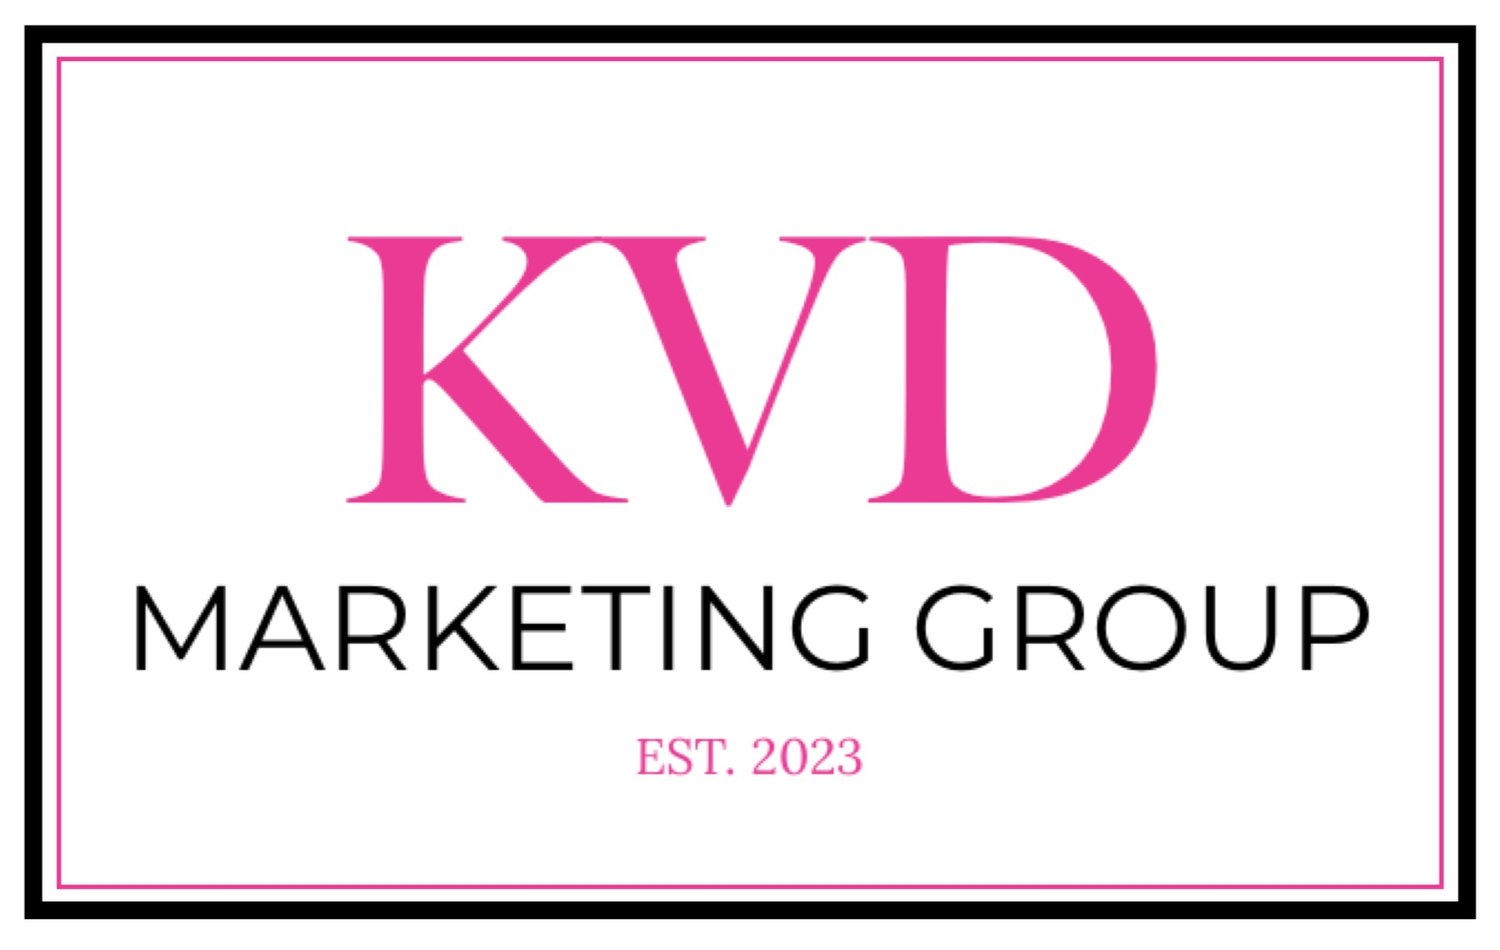 KVD Marketing Group